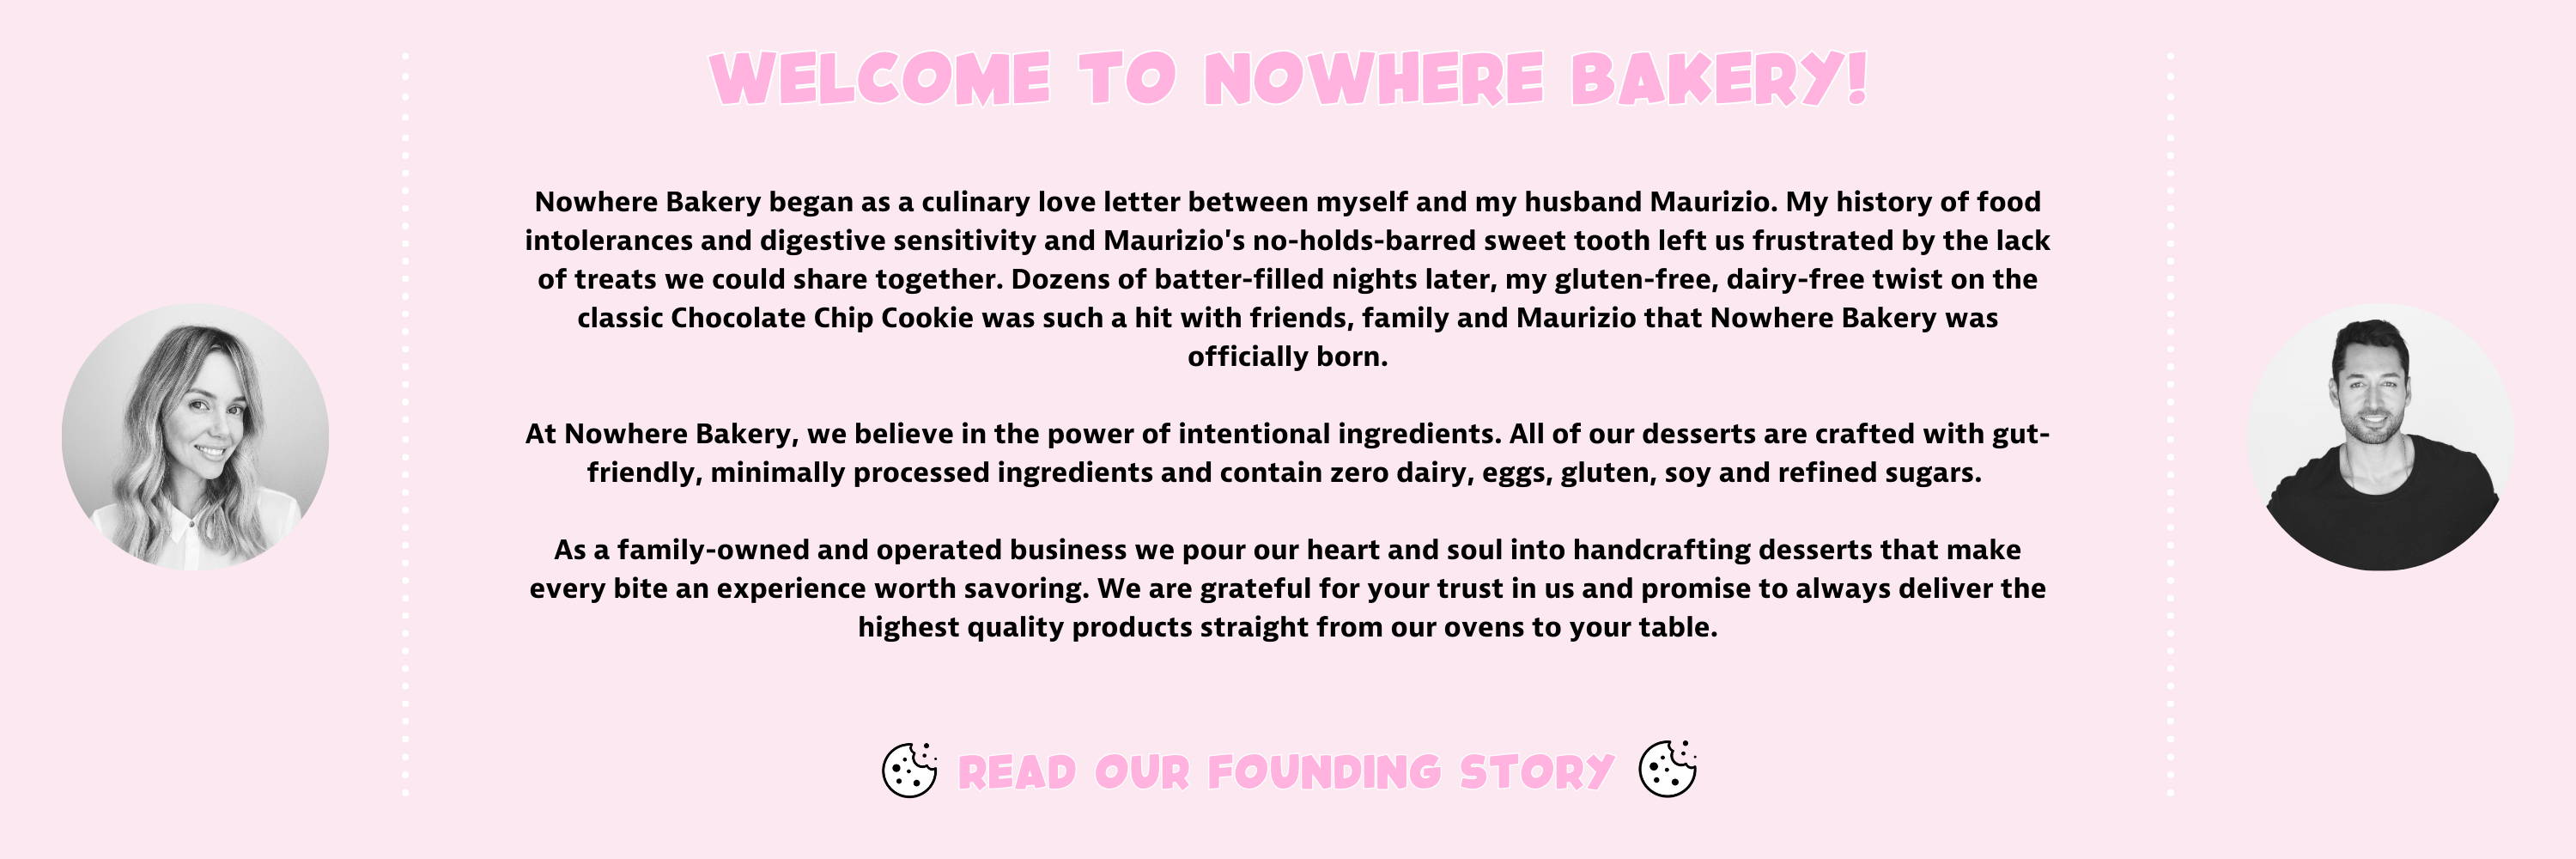 Nowhere Bakery founding story